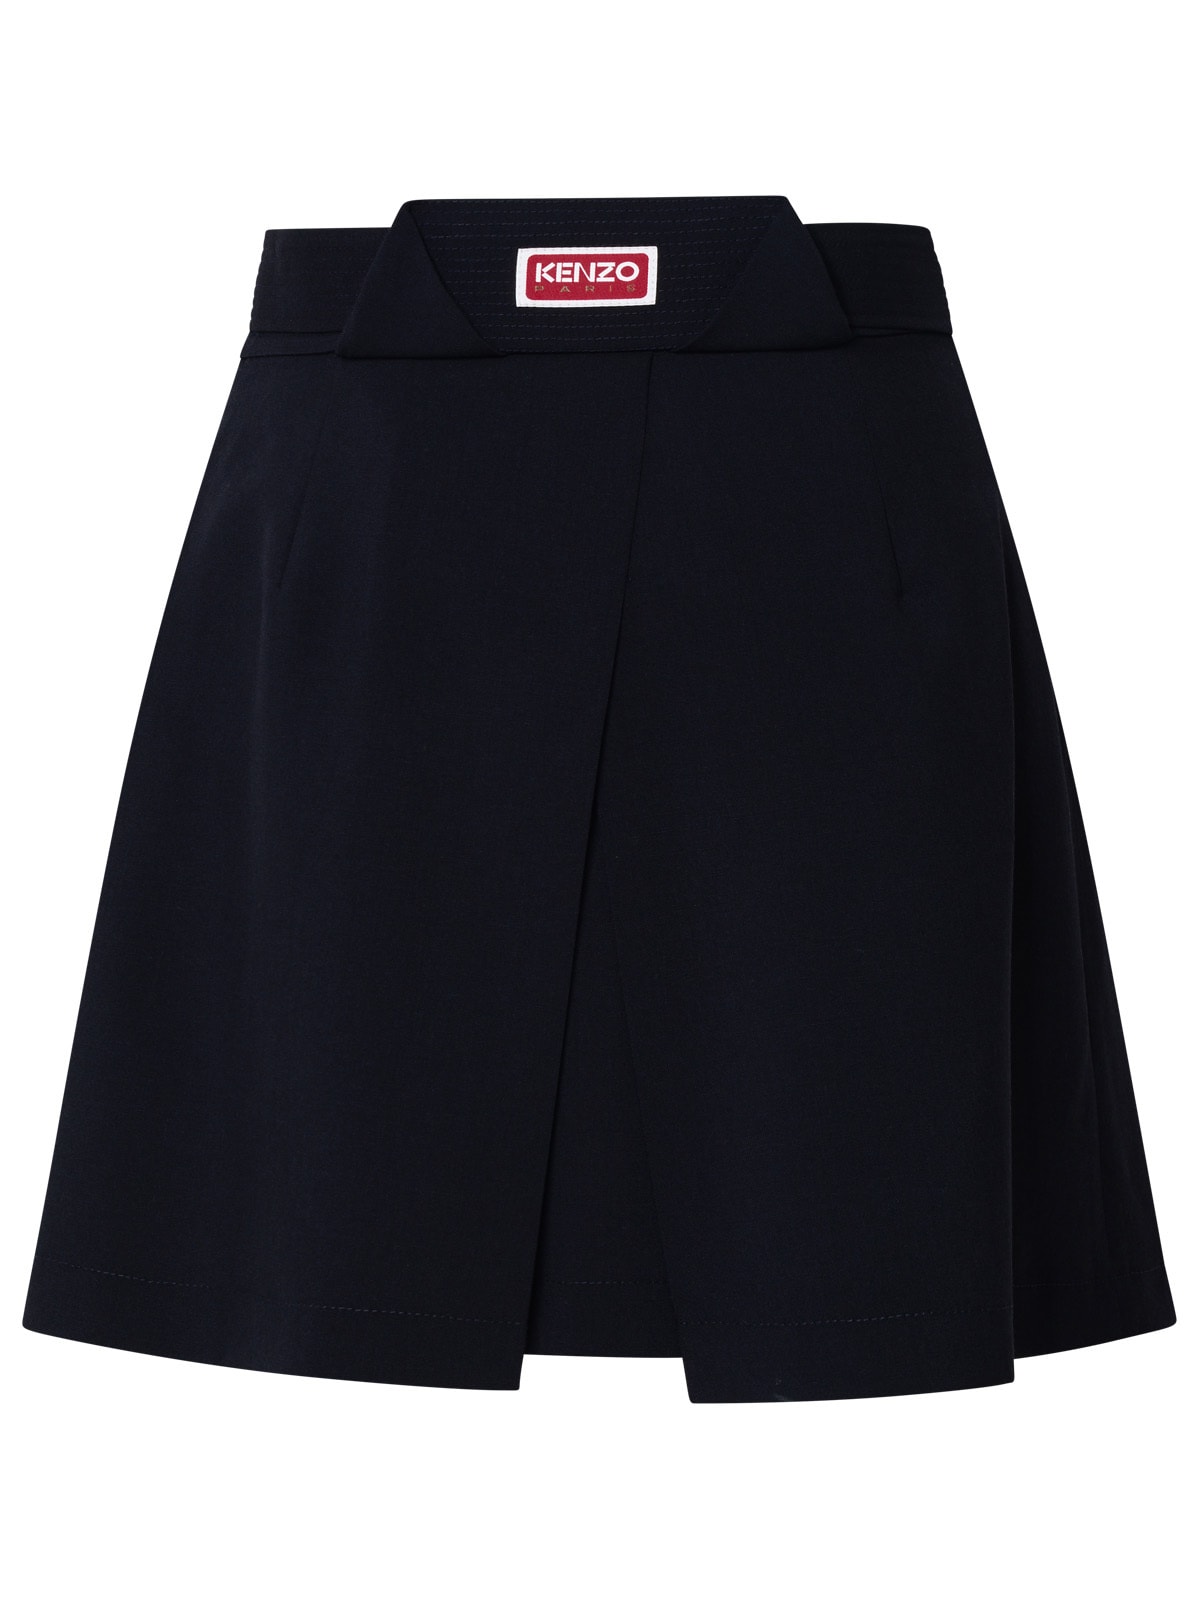 Shop Kenzo Navy Virgin Wool Miniskirt